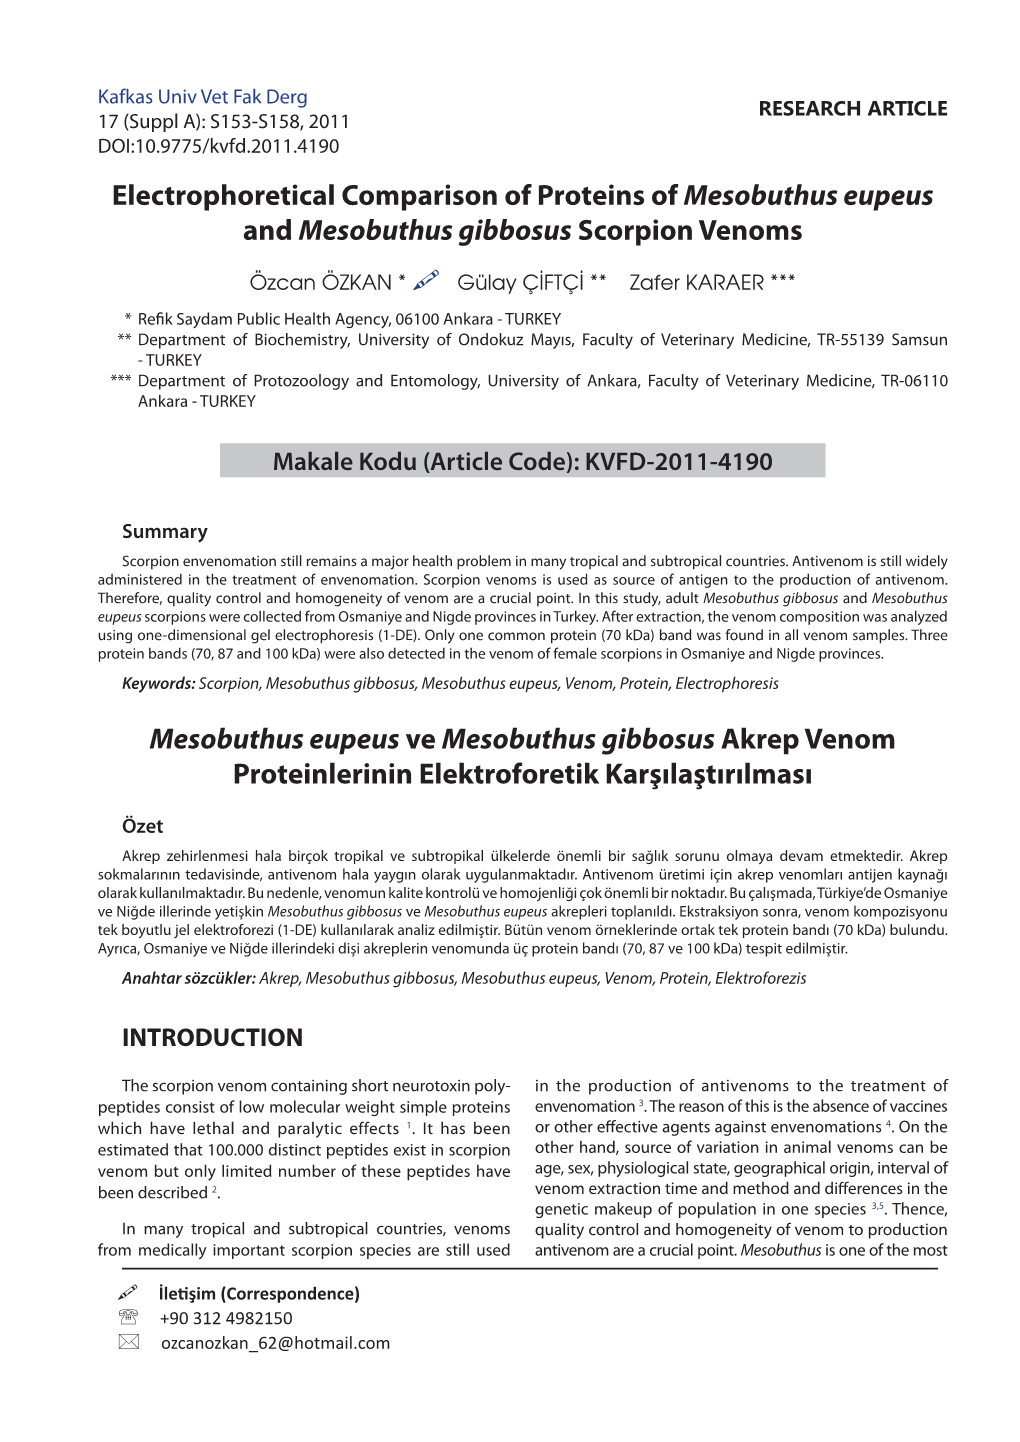 Mesobuthus Eupeus Ve Mesobuthus Gibbosus Akrep Venom Proteinlerinin Elektroforetik Karşılaştırılması